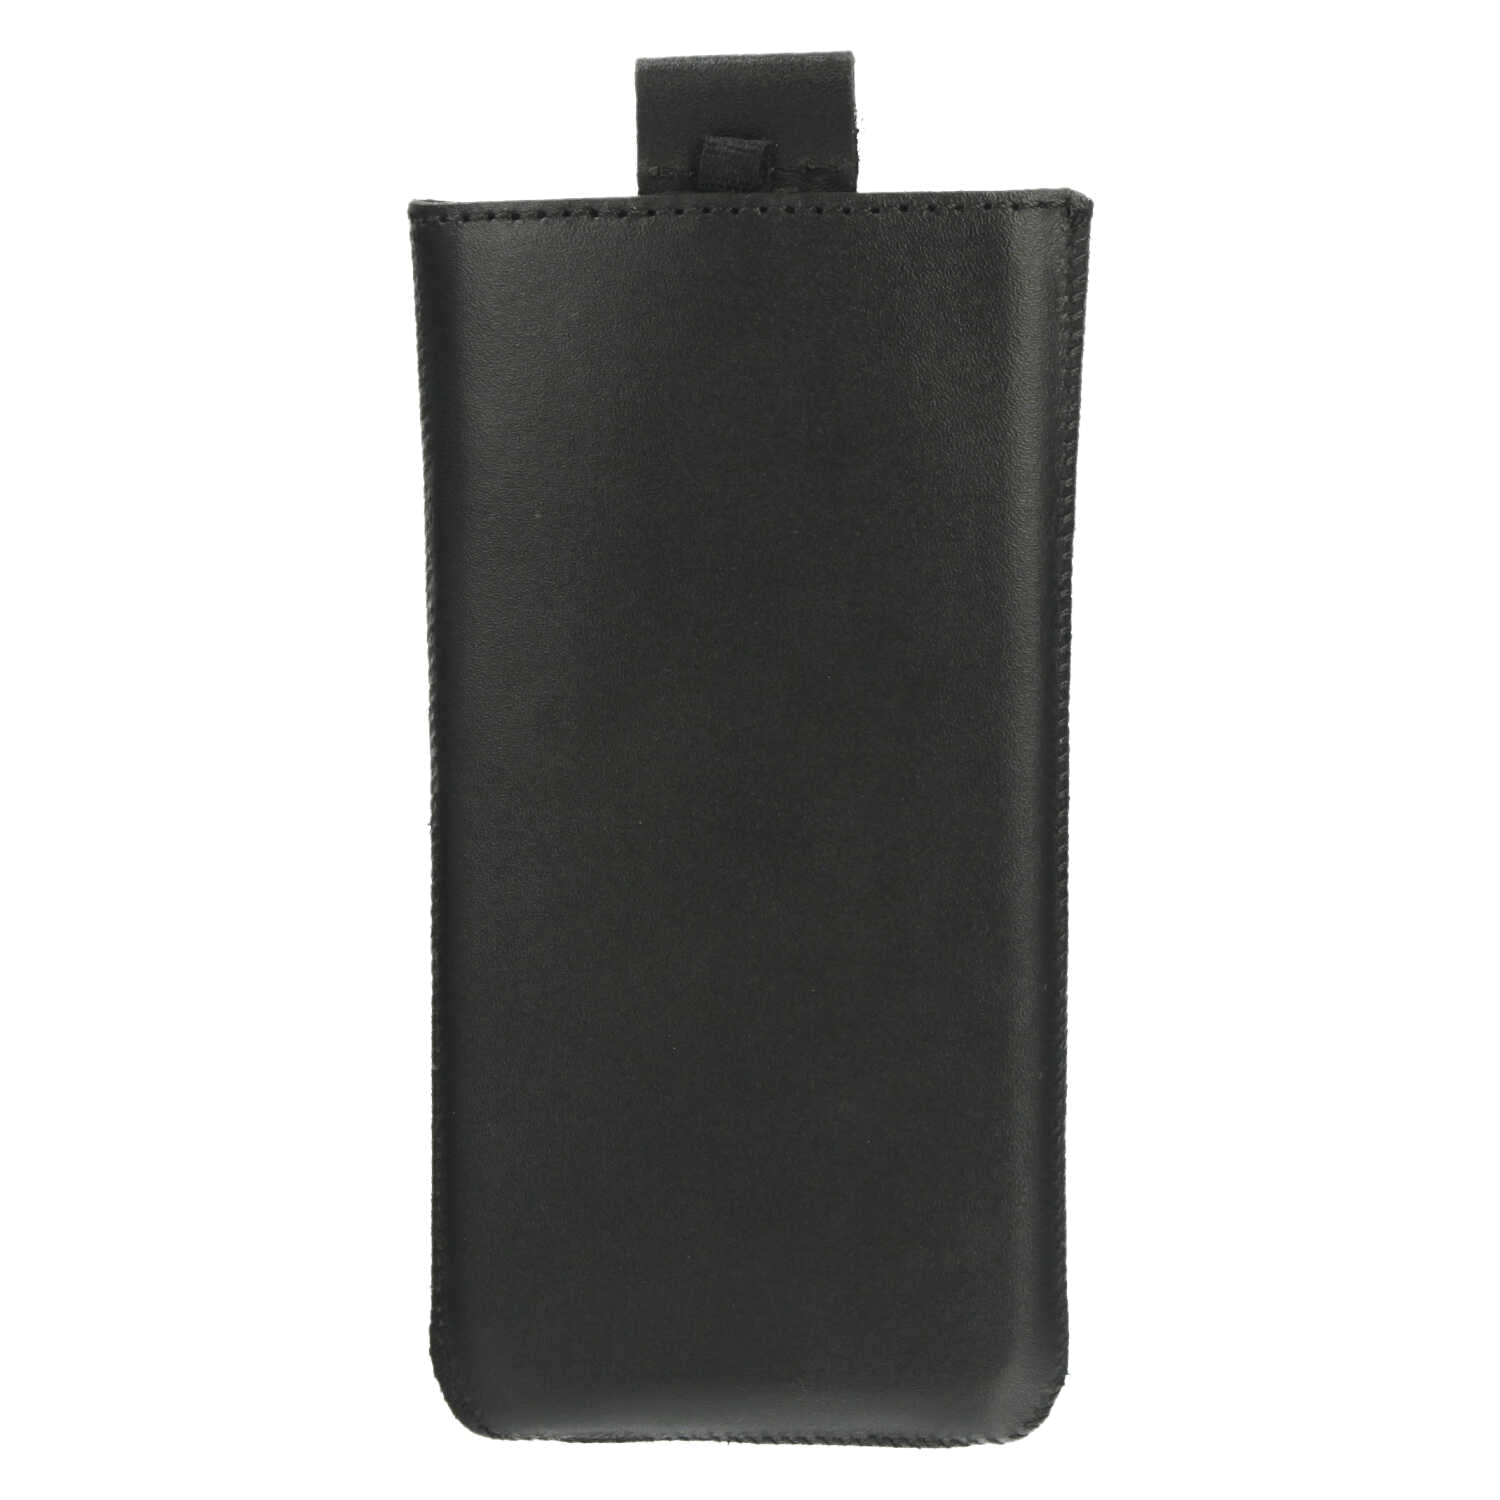  Einschubhülle Pocket Classic Schwarz  iPhone 12 - 13 mini - H130 x B64 x D8